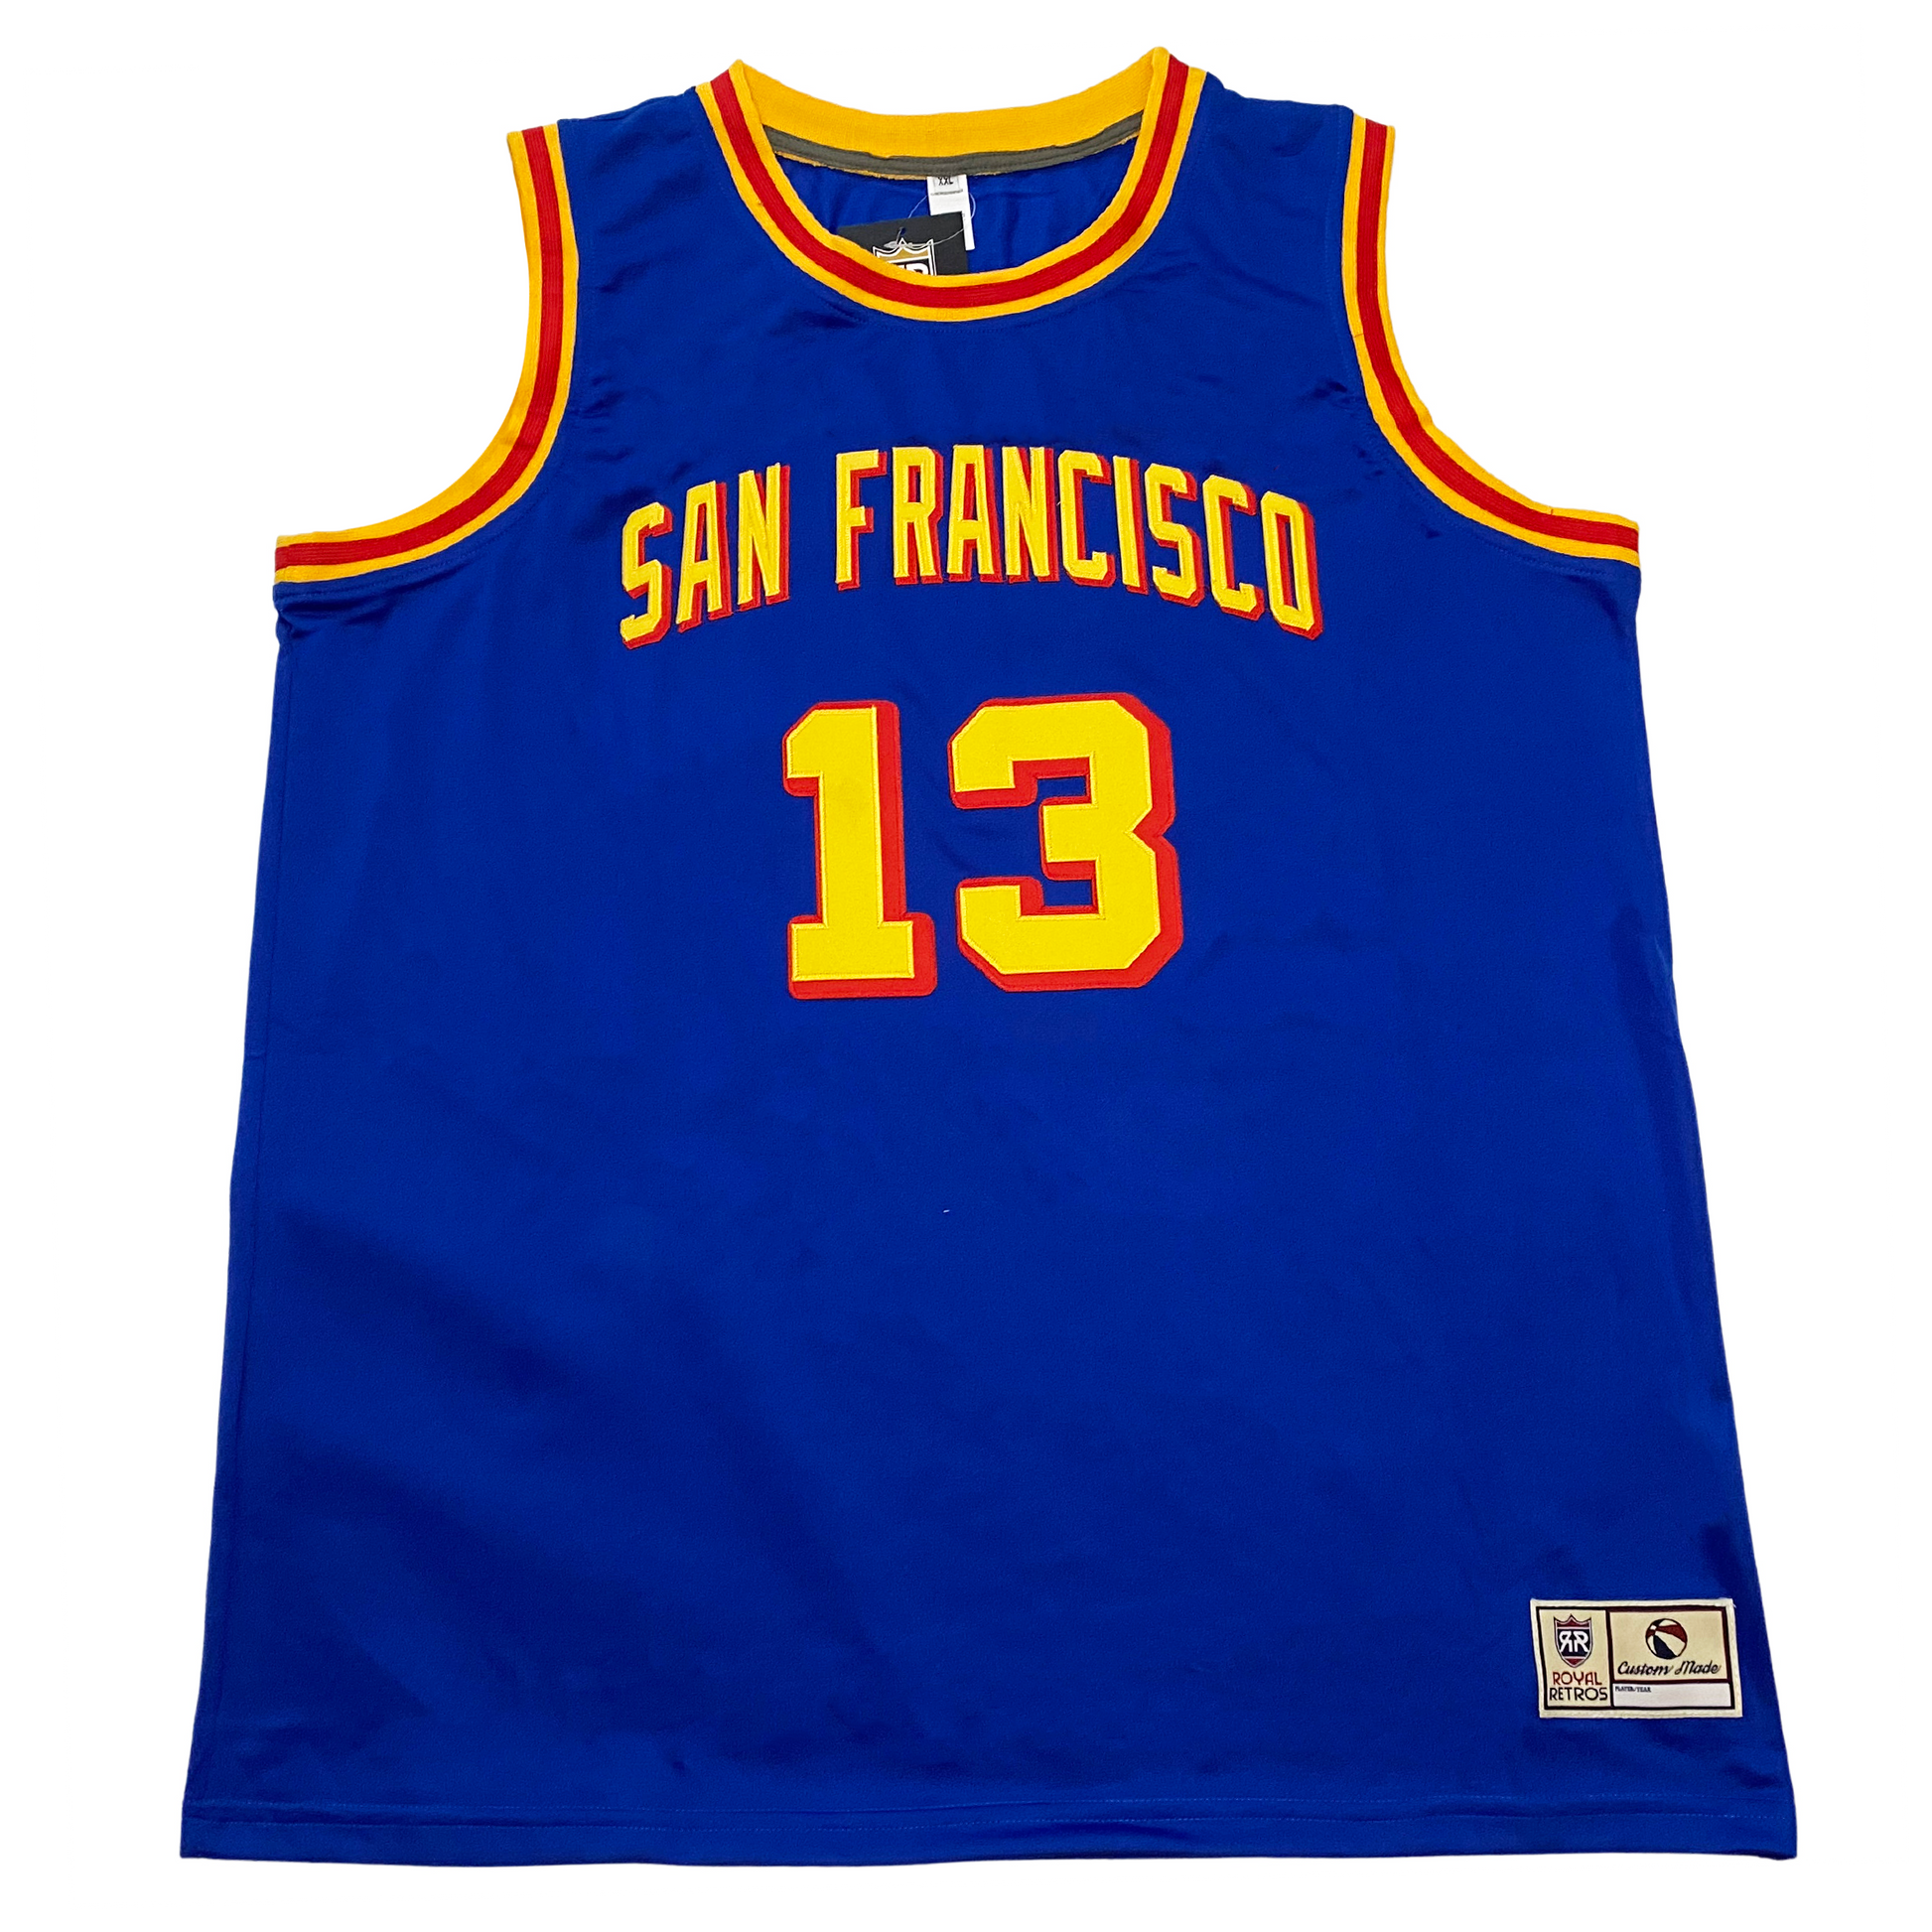 San Francisco Warriors Basketball Apparel Store